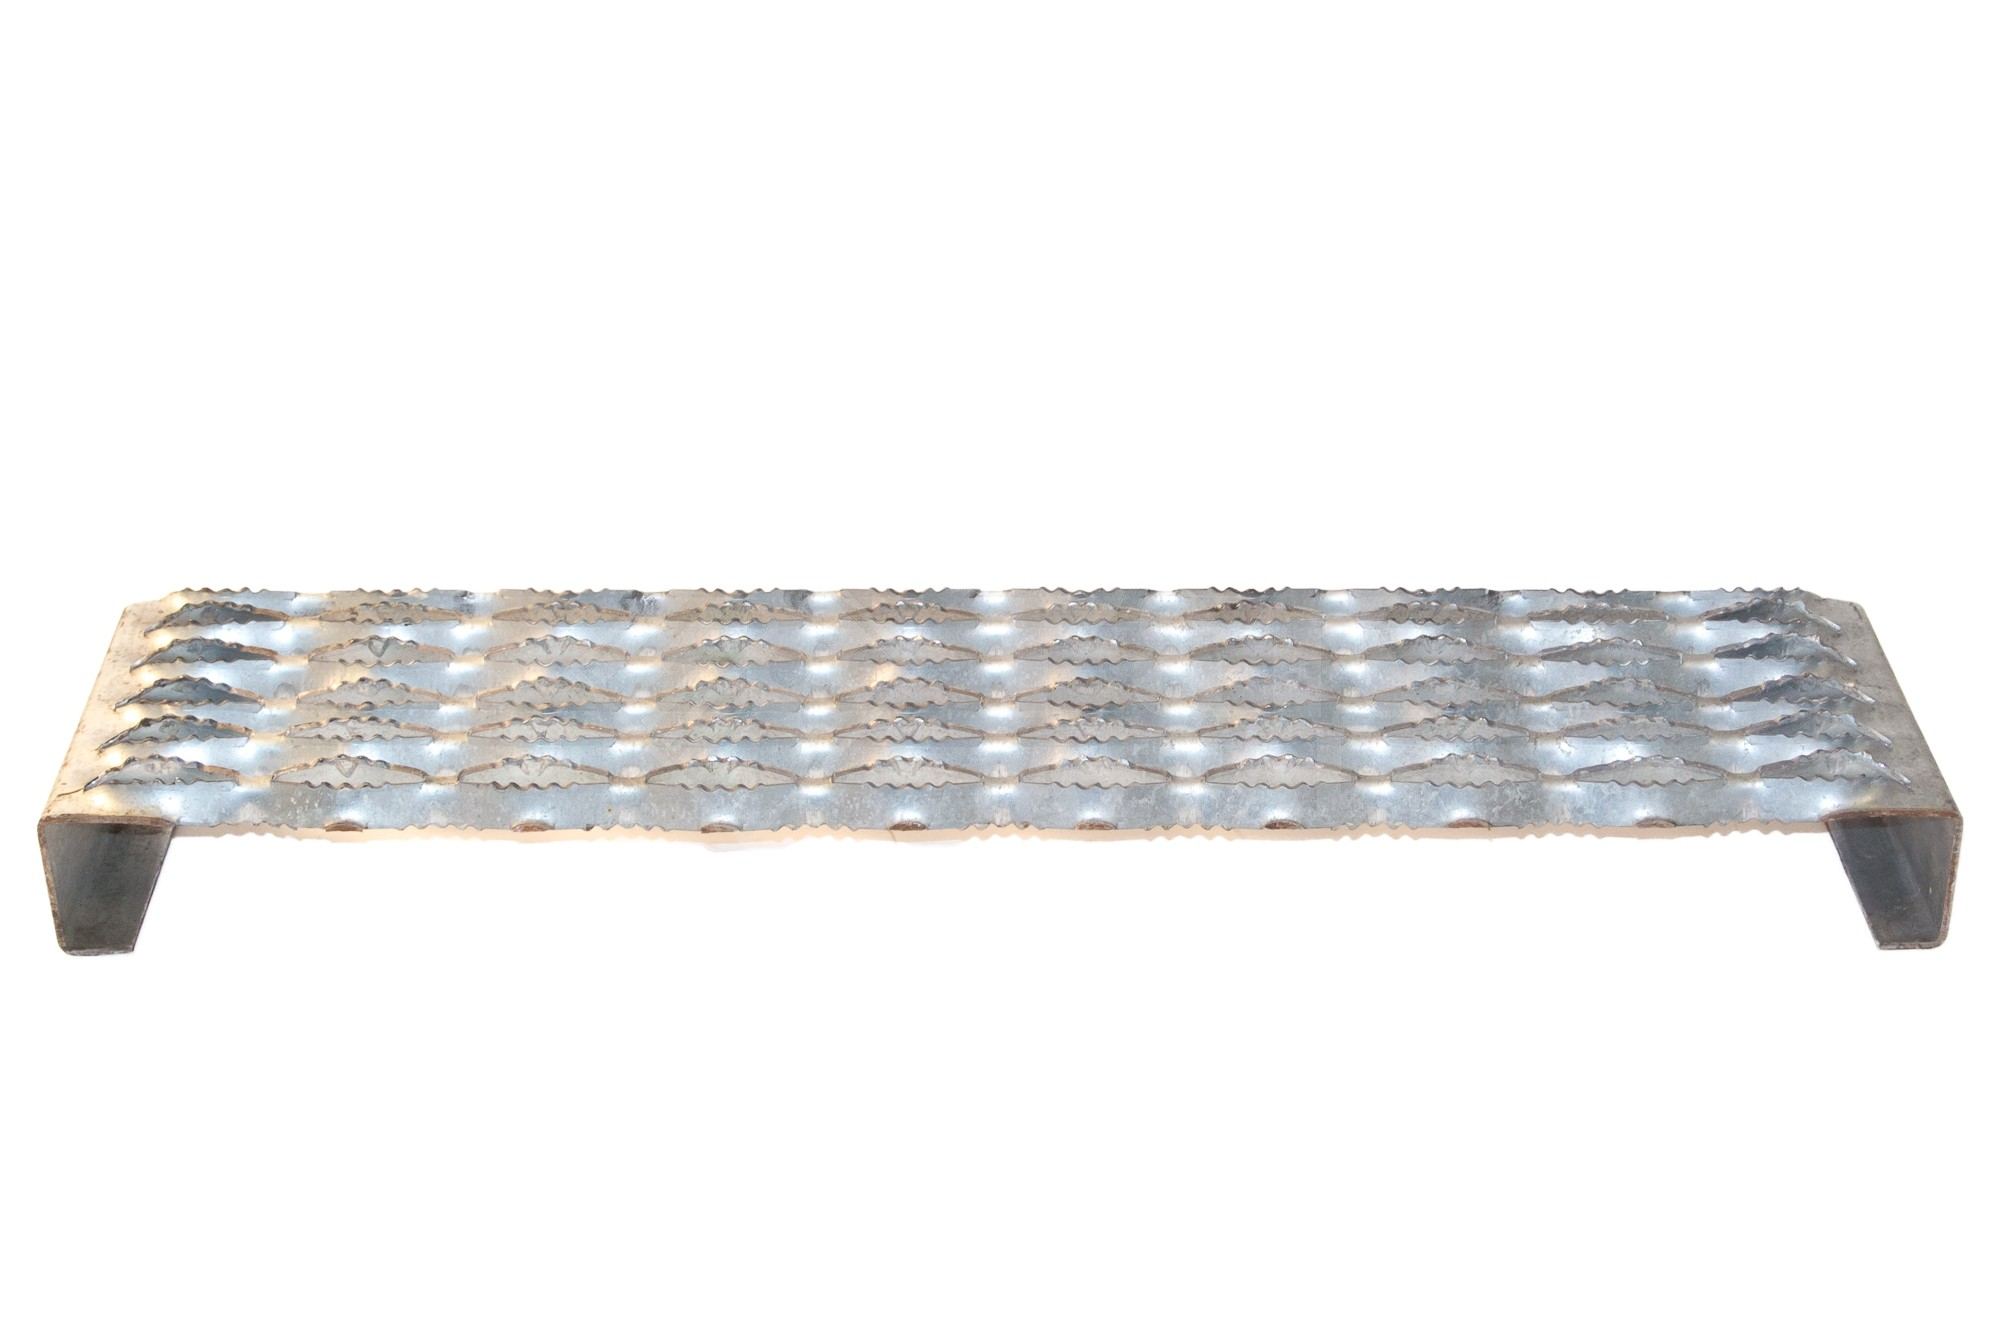 72 Length x 9-1/2 Width x 1-1/2 Depth 3141514-72 Grip Strut Channel 14 Gauge Carbon Steel 4-Diamond Plank Safety Grating 